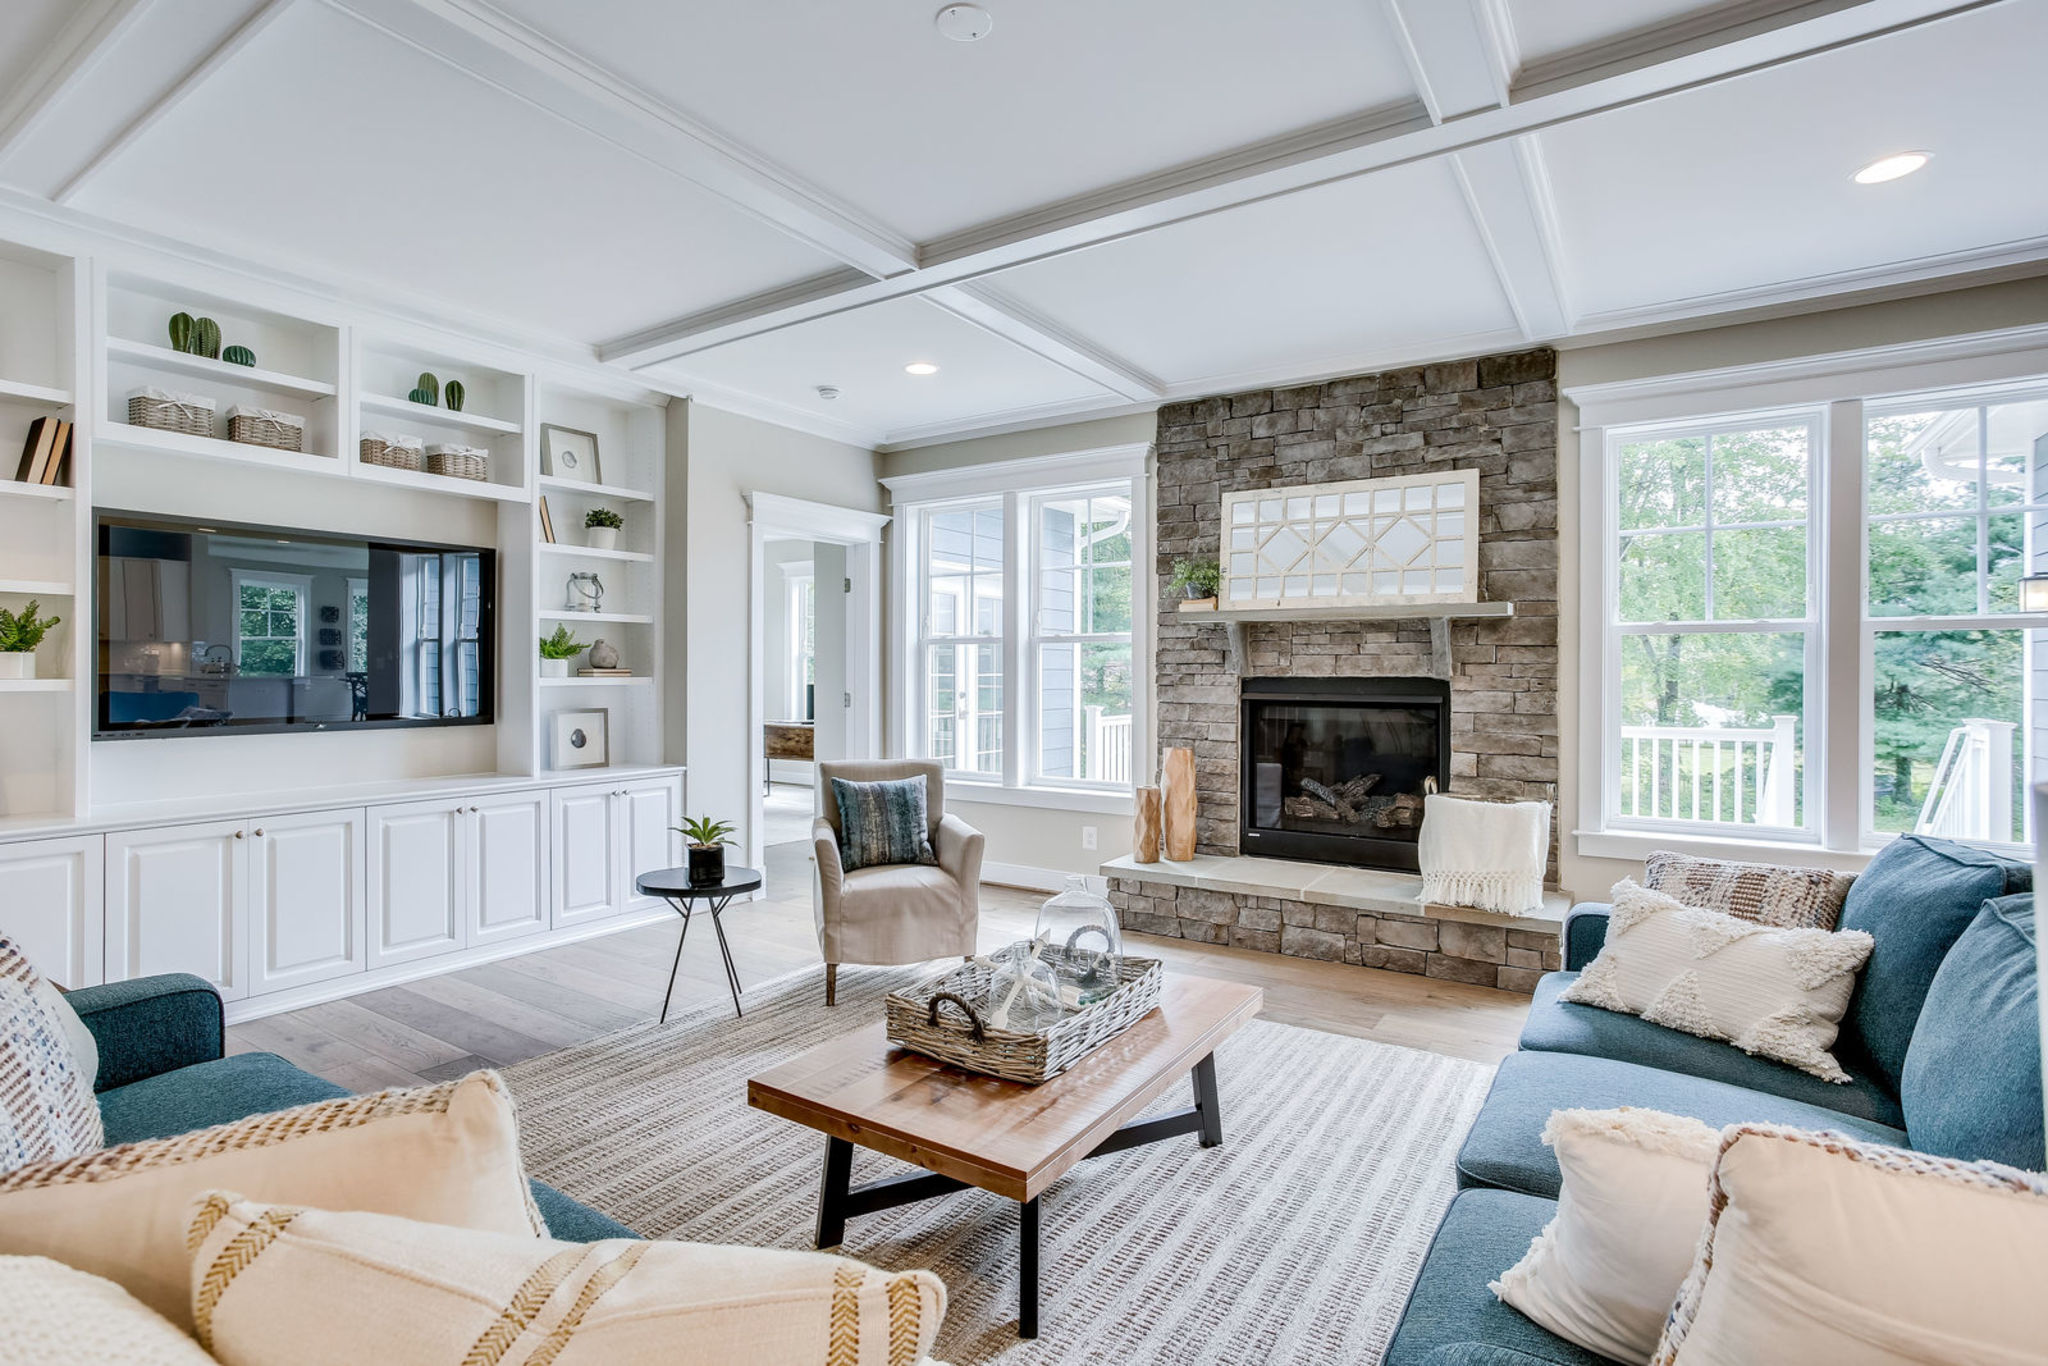 Living room in Chapman floorplan by Evergreene Homes